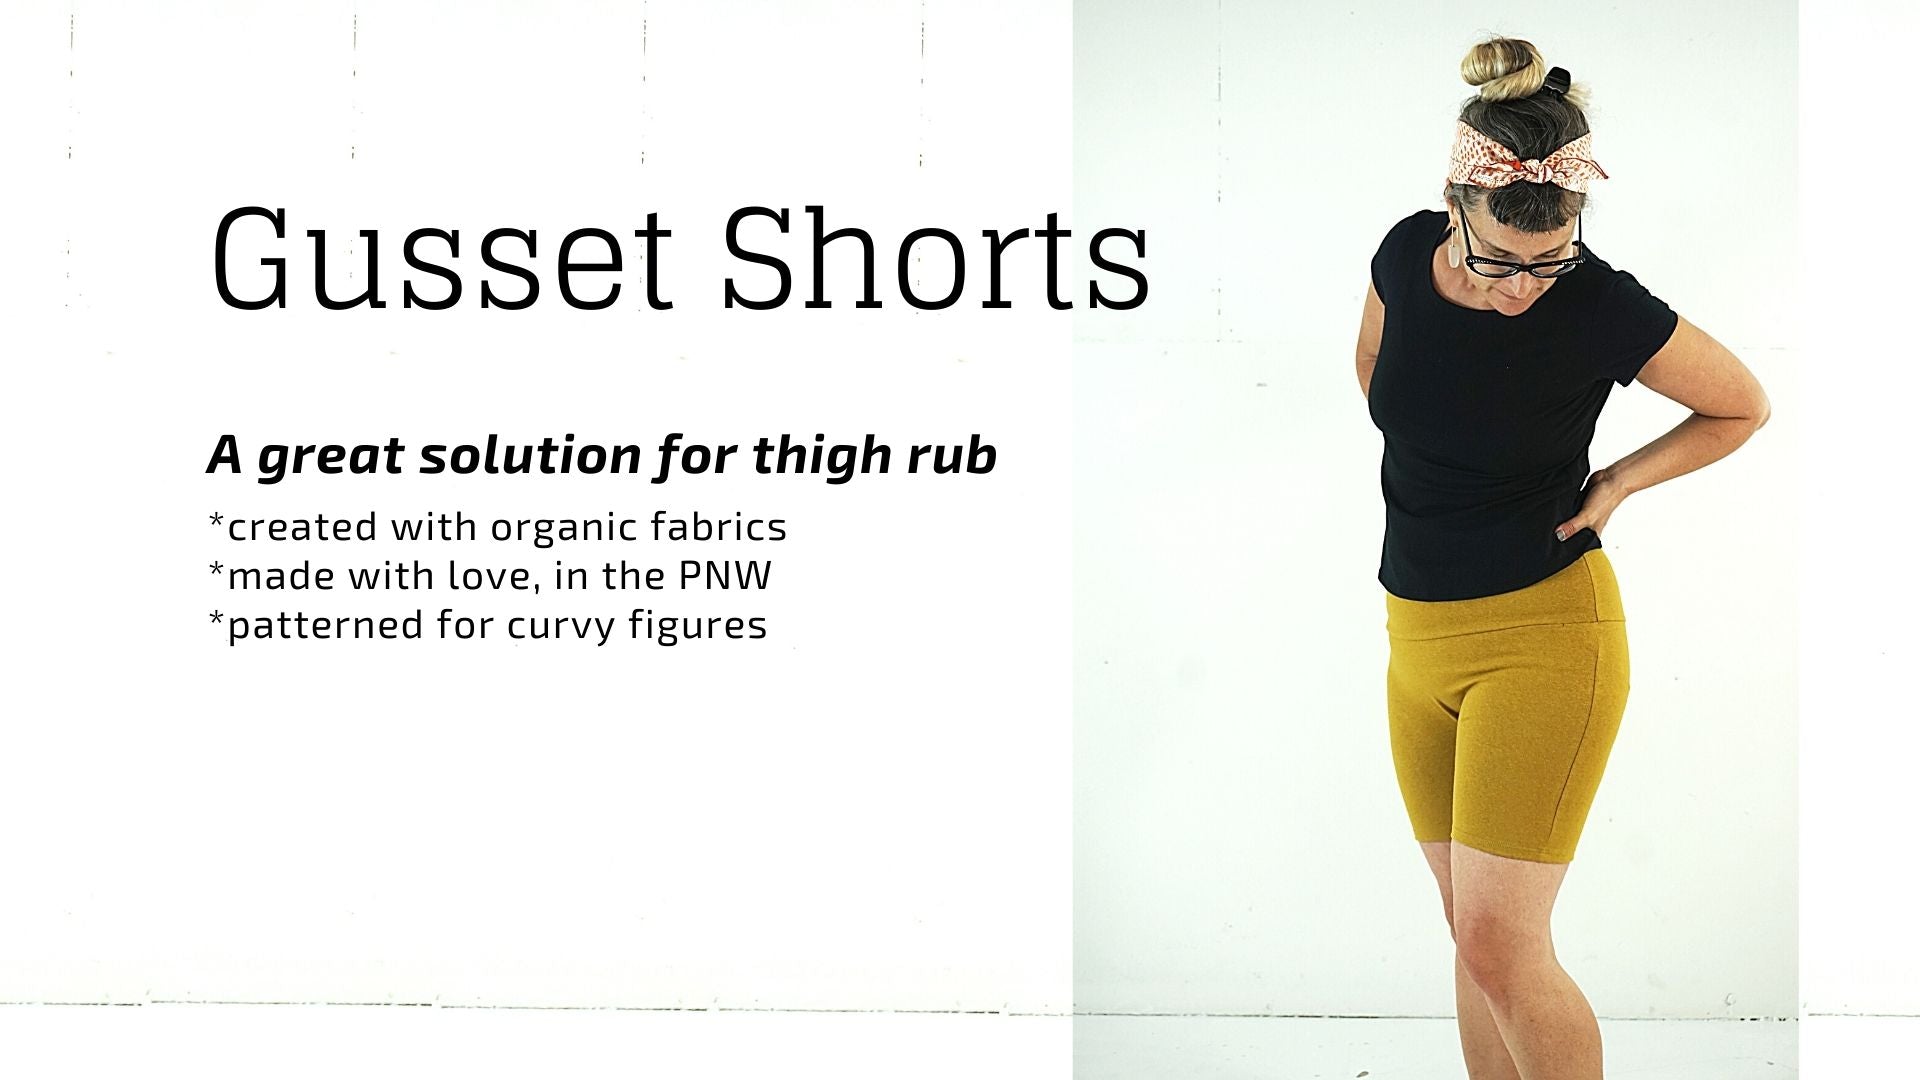 Hemp and organic cotton gusset shorts